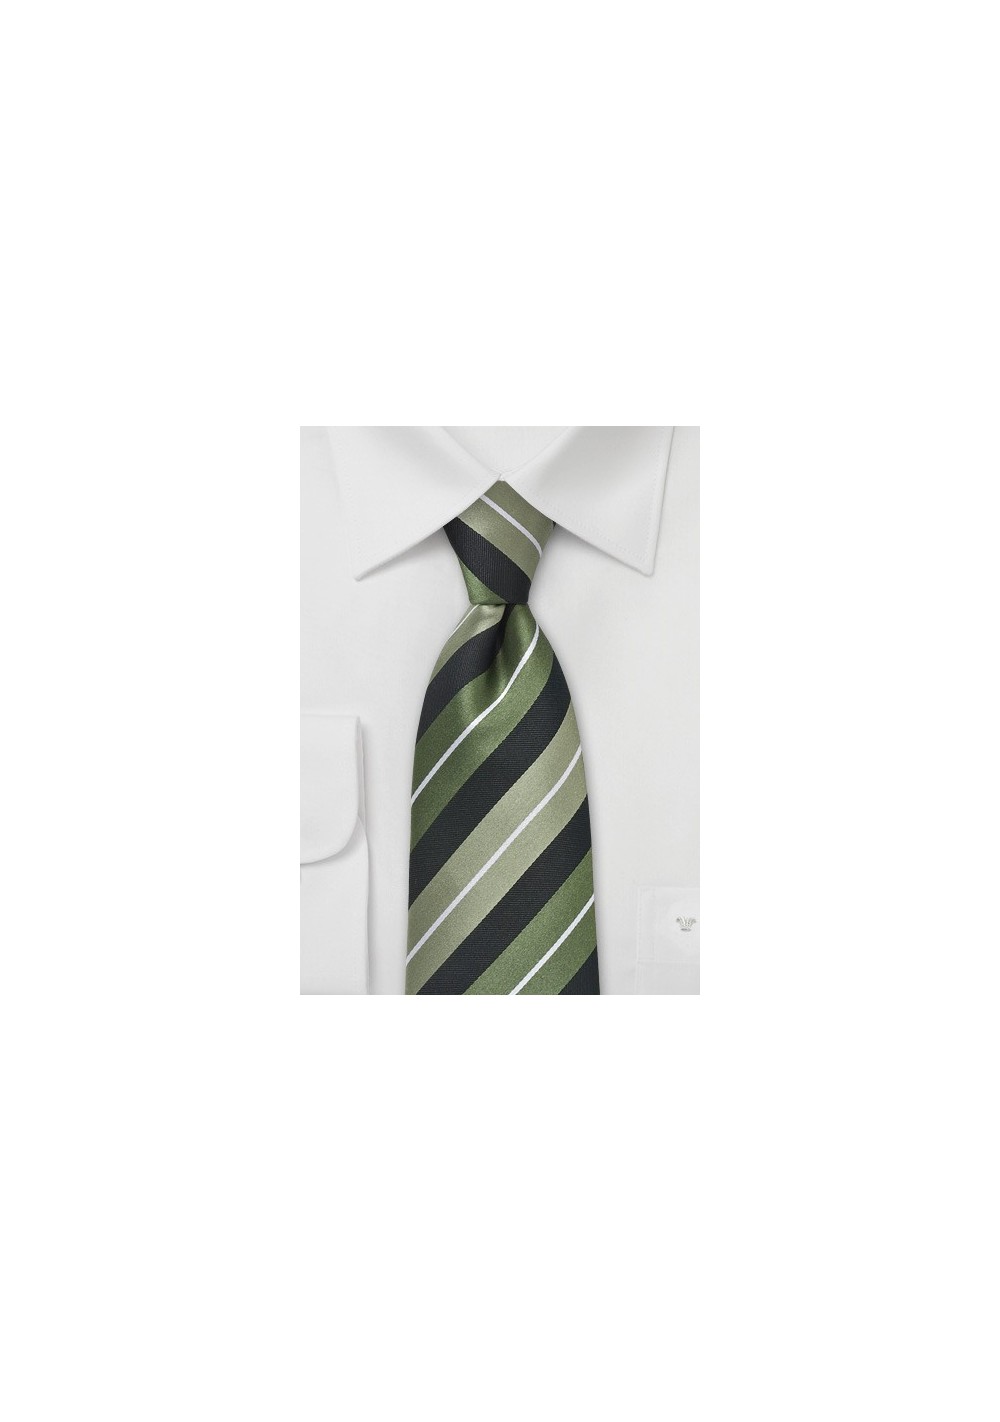 Striped Tie in Sage Greeens